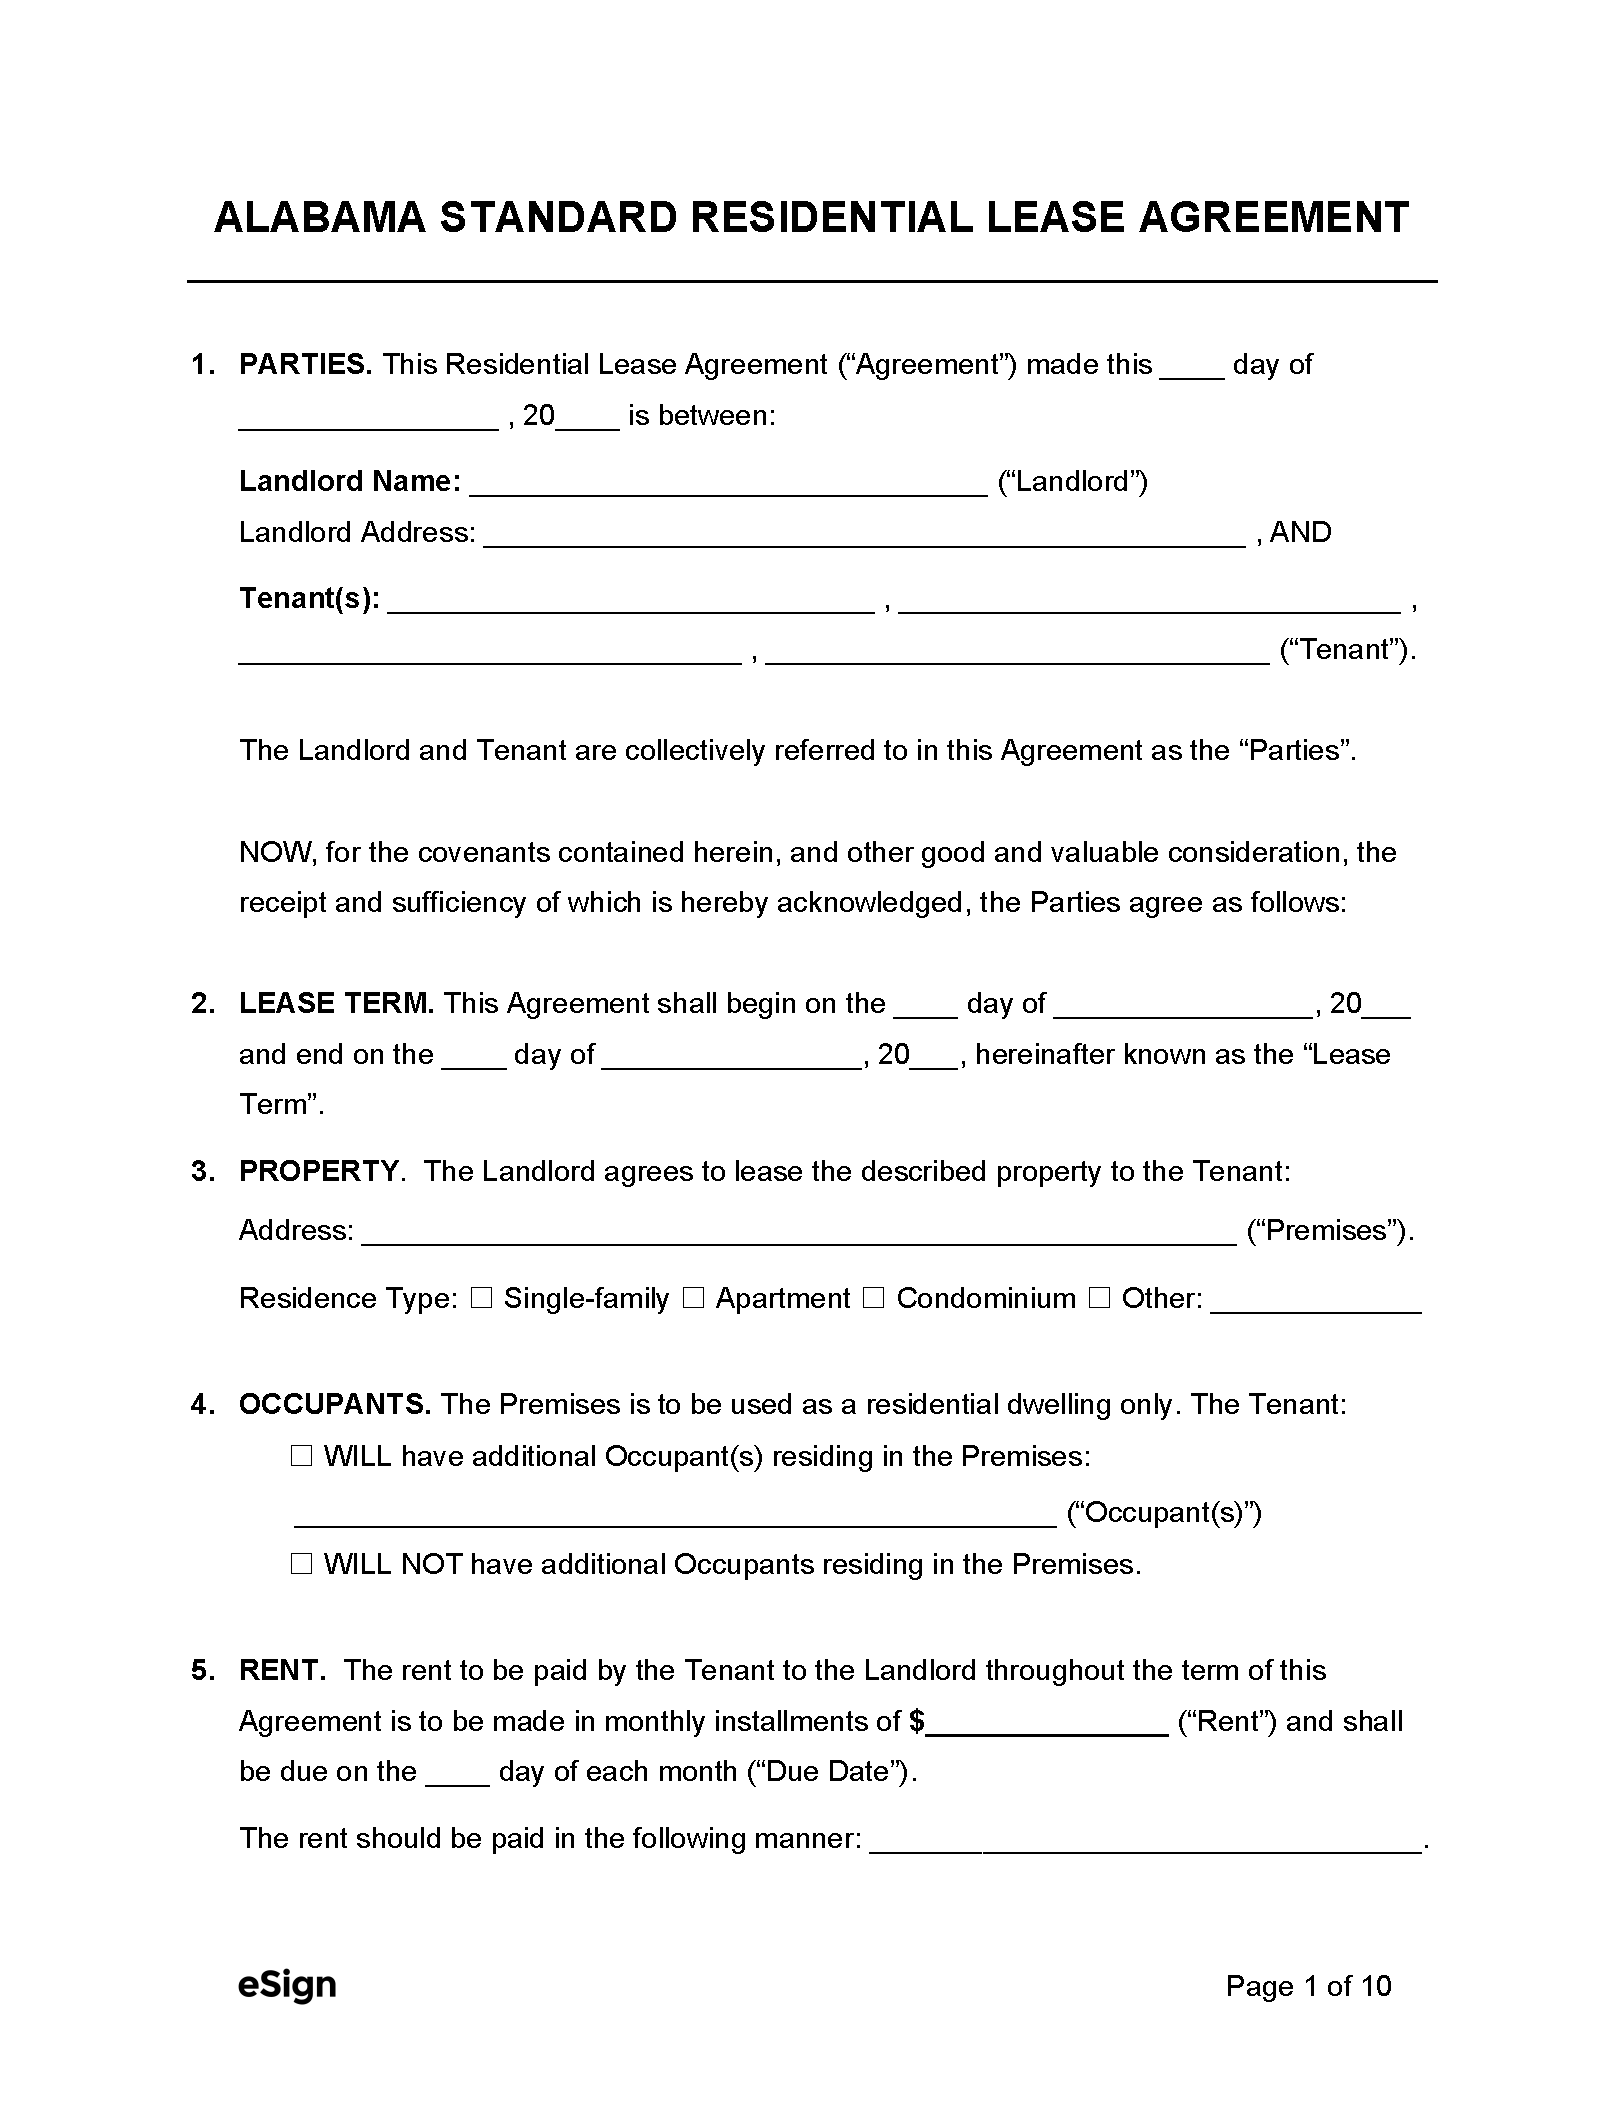 Alabama Residential Lease Agreement Short Form Printable Form 